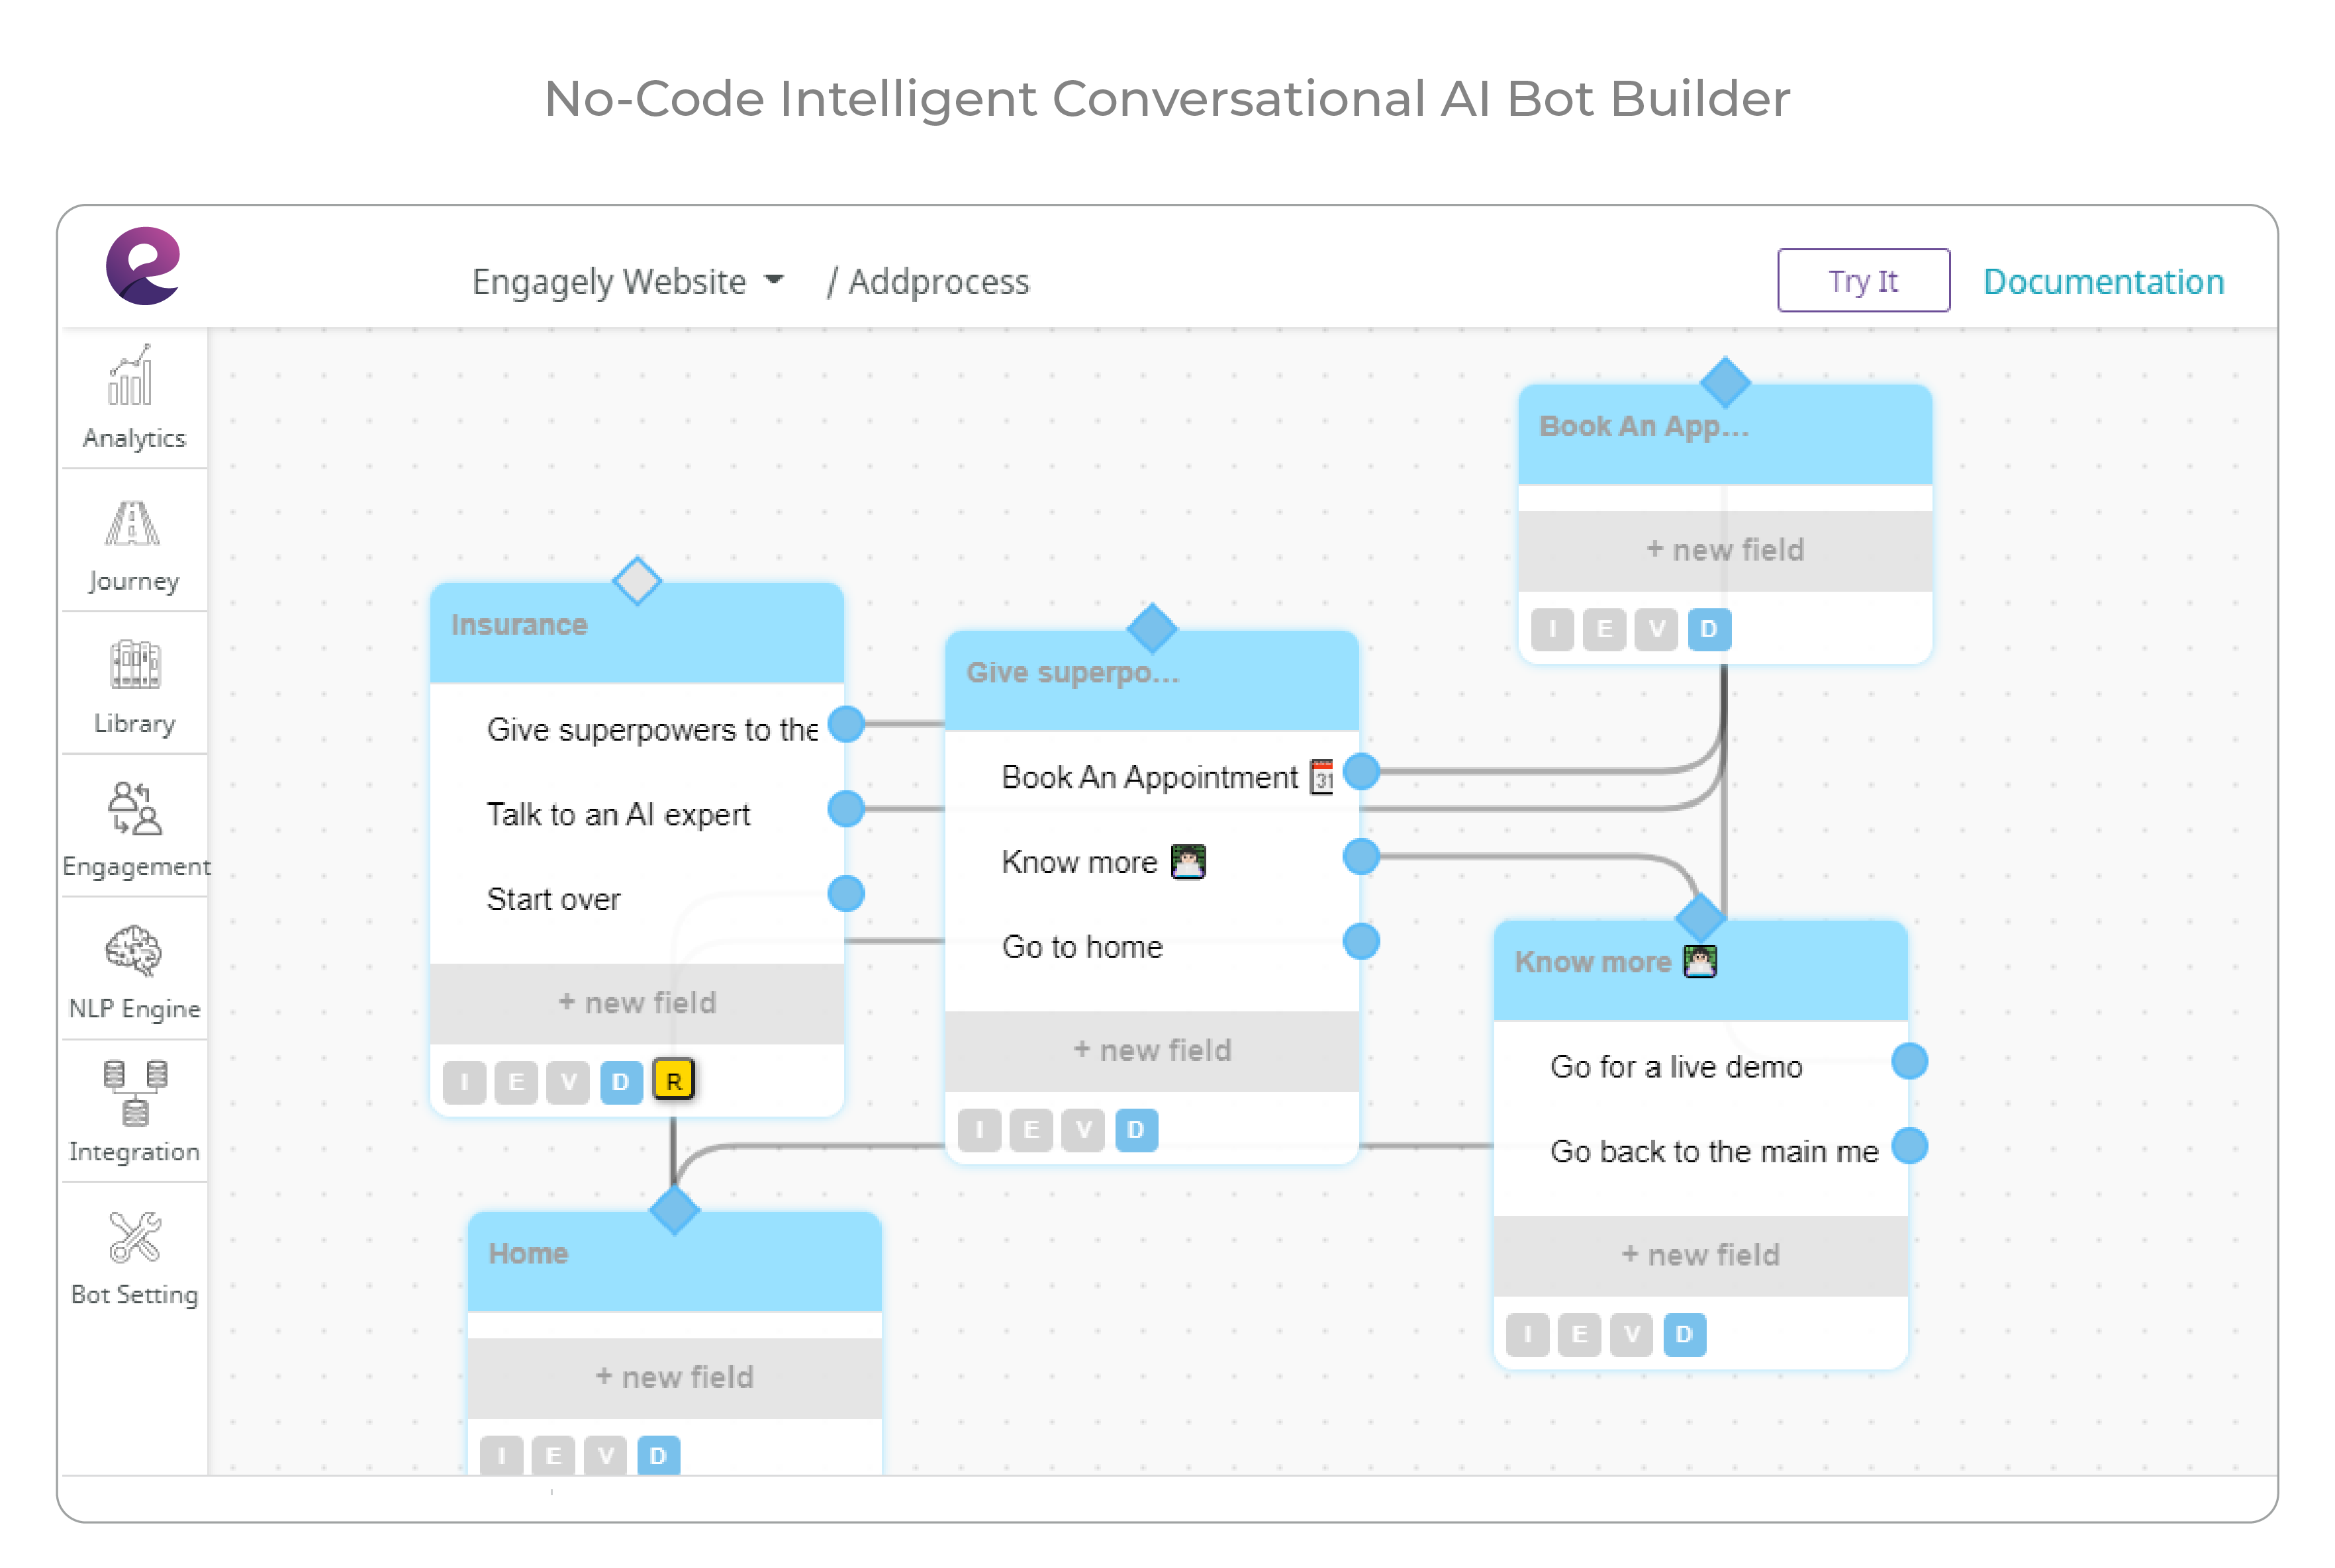 No-Code intelligent conversational AI bot builder